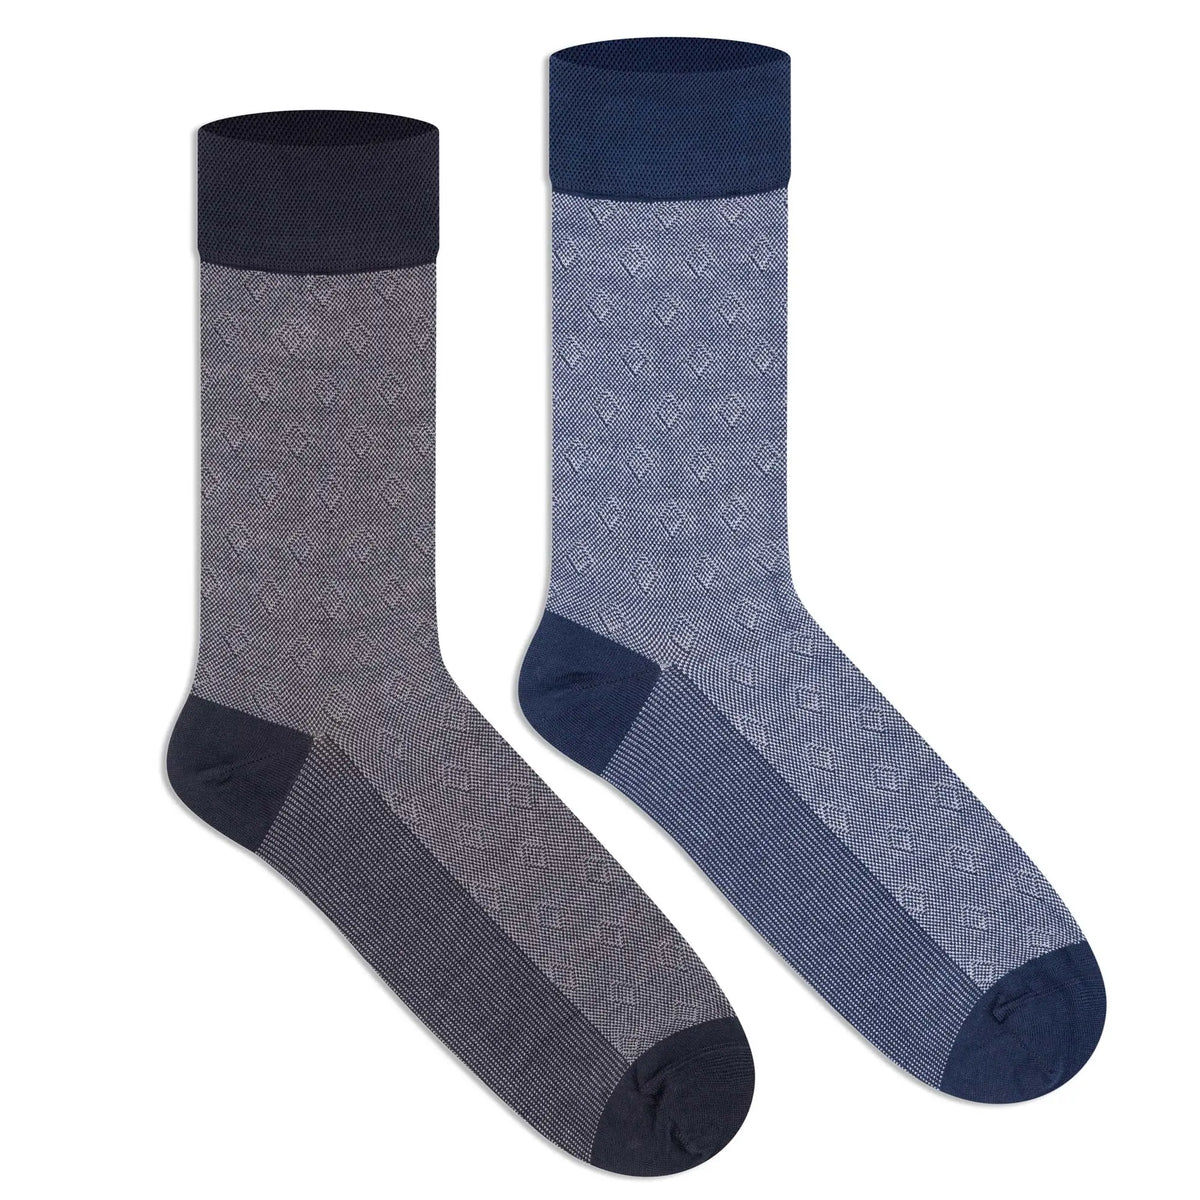 Premium Crew Socks for Men (Pack of 2)